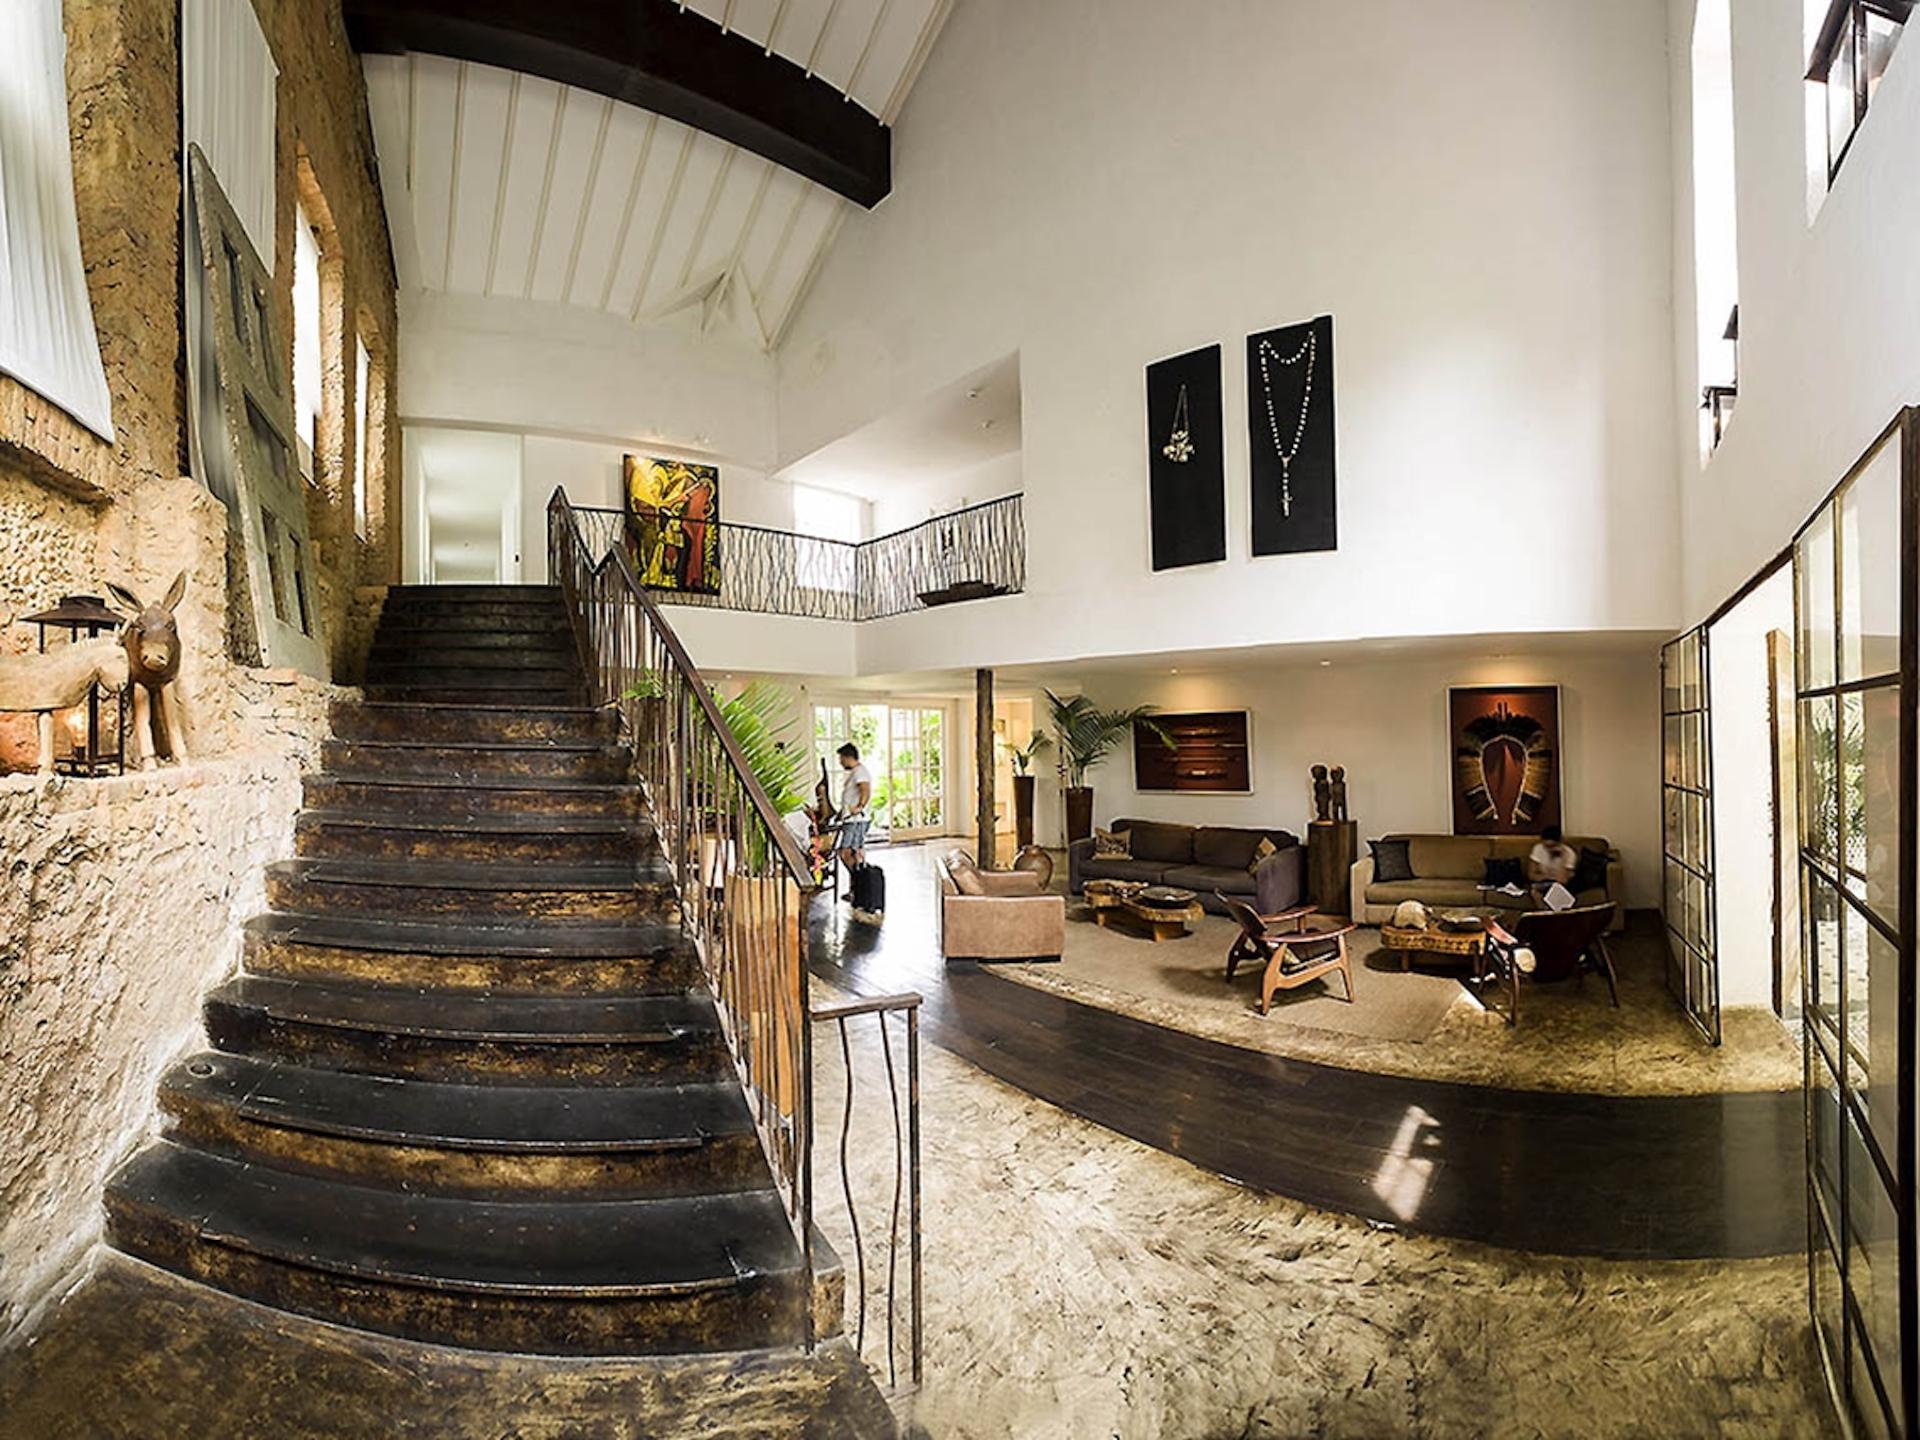 Lobby of Hotel Santa Teresa in Rio de Janeiro, Brazil